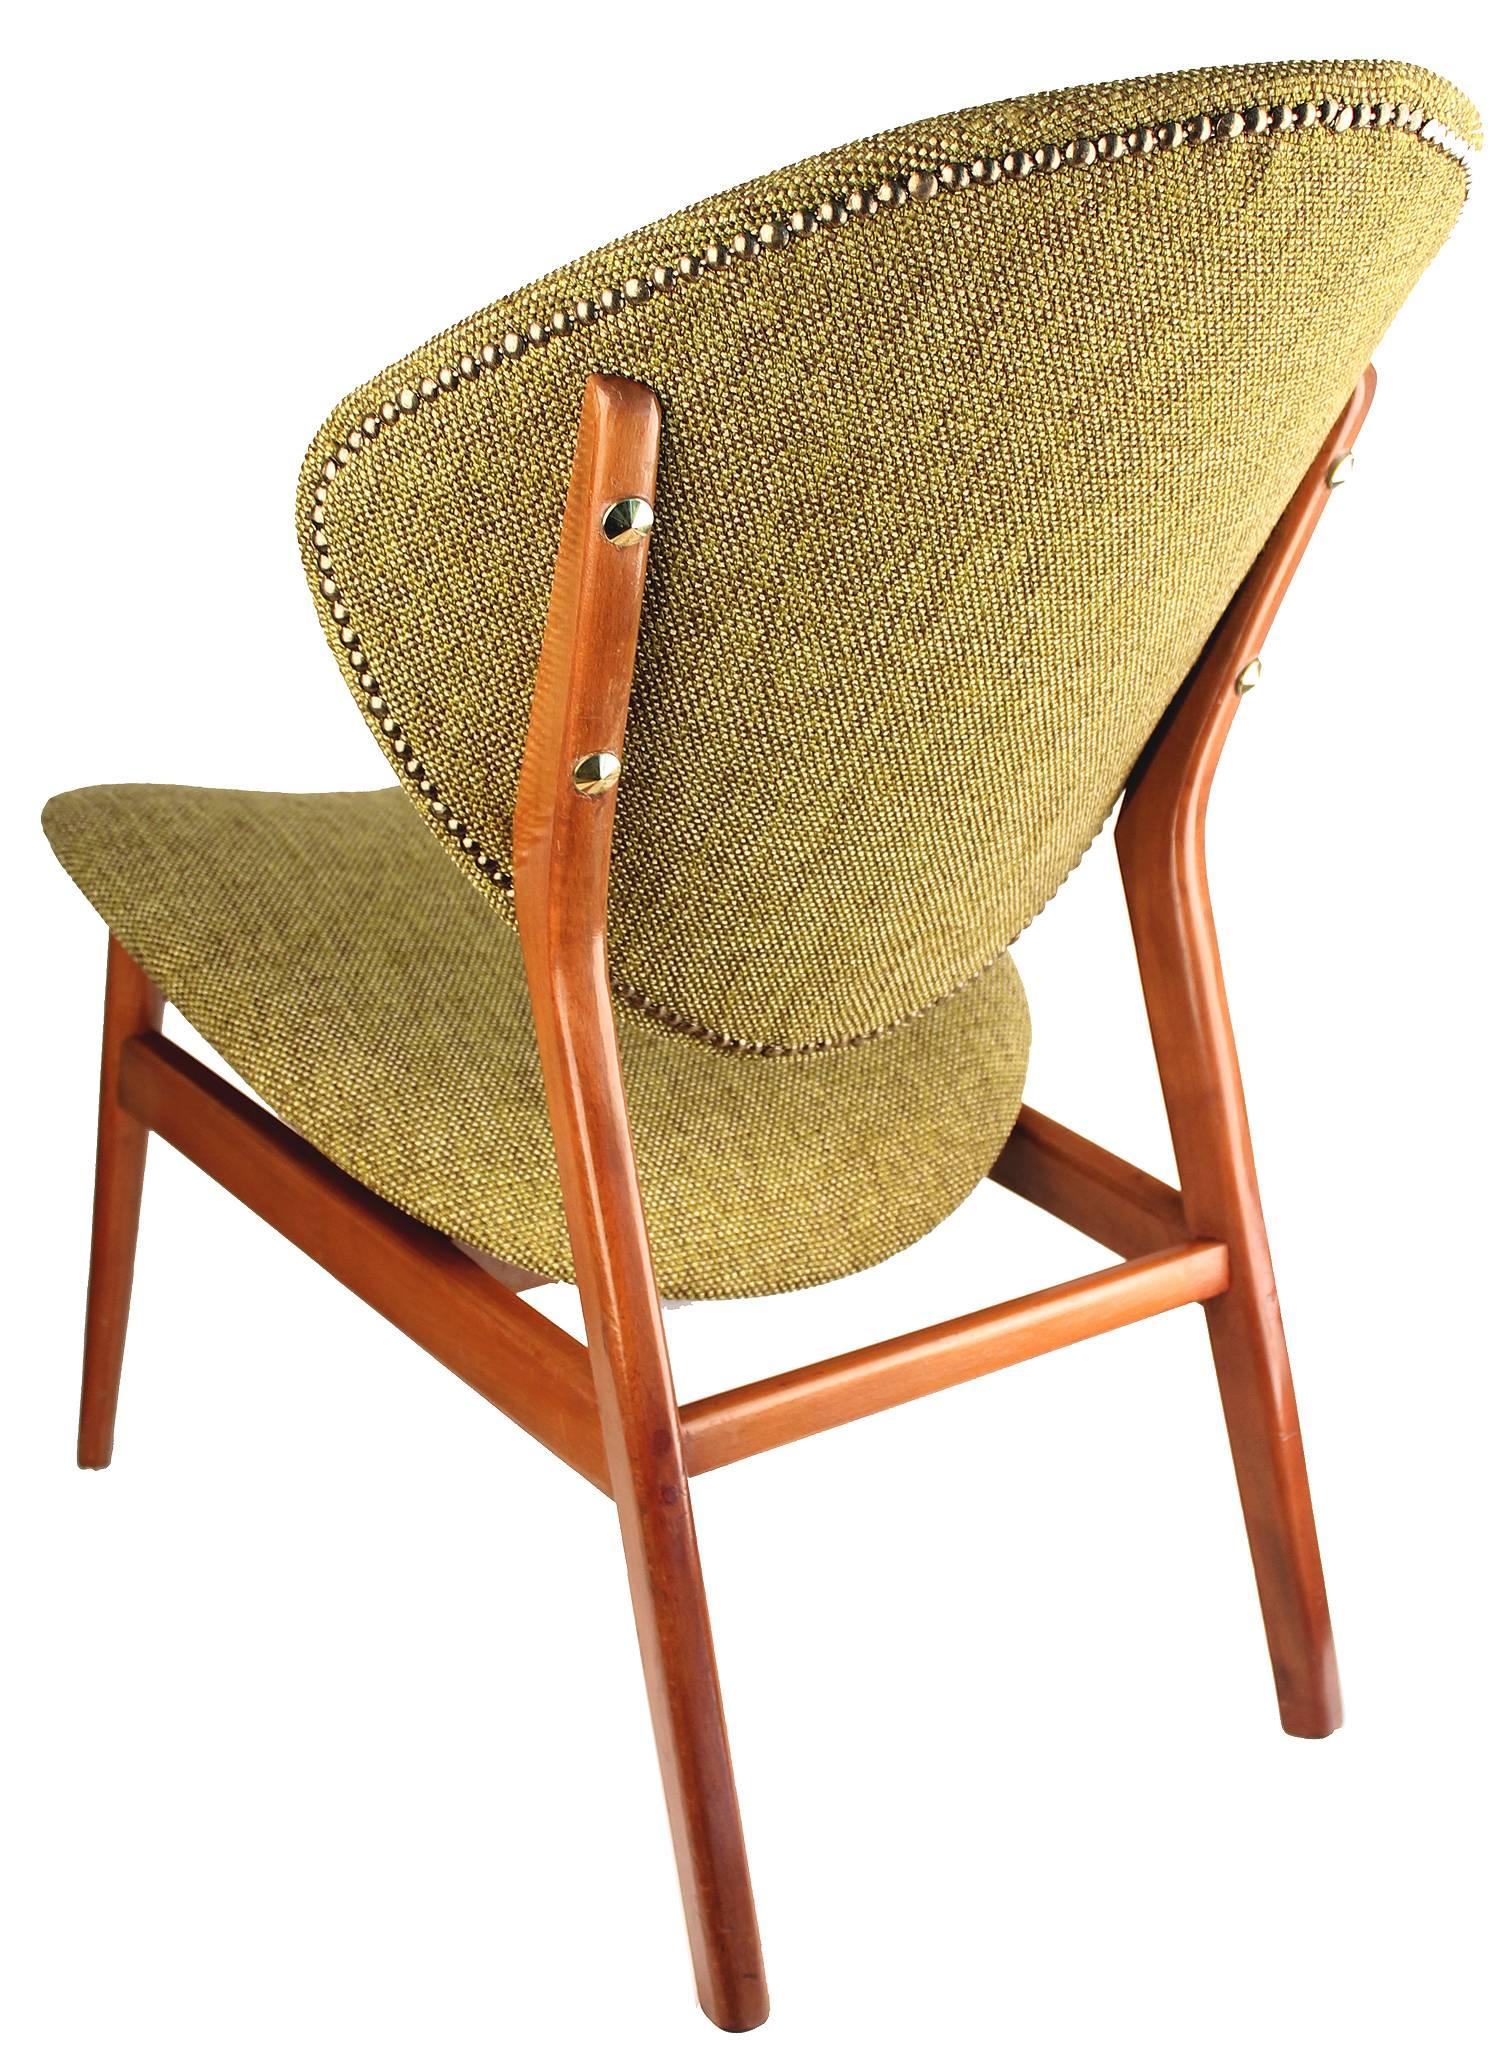 Mid-20th Century Pair of Sculptural Danish Modern Lounge Chairs - Juhl Jalk Era